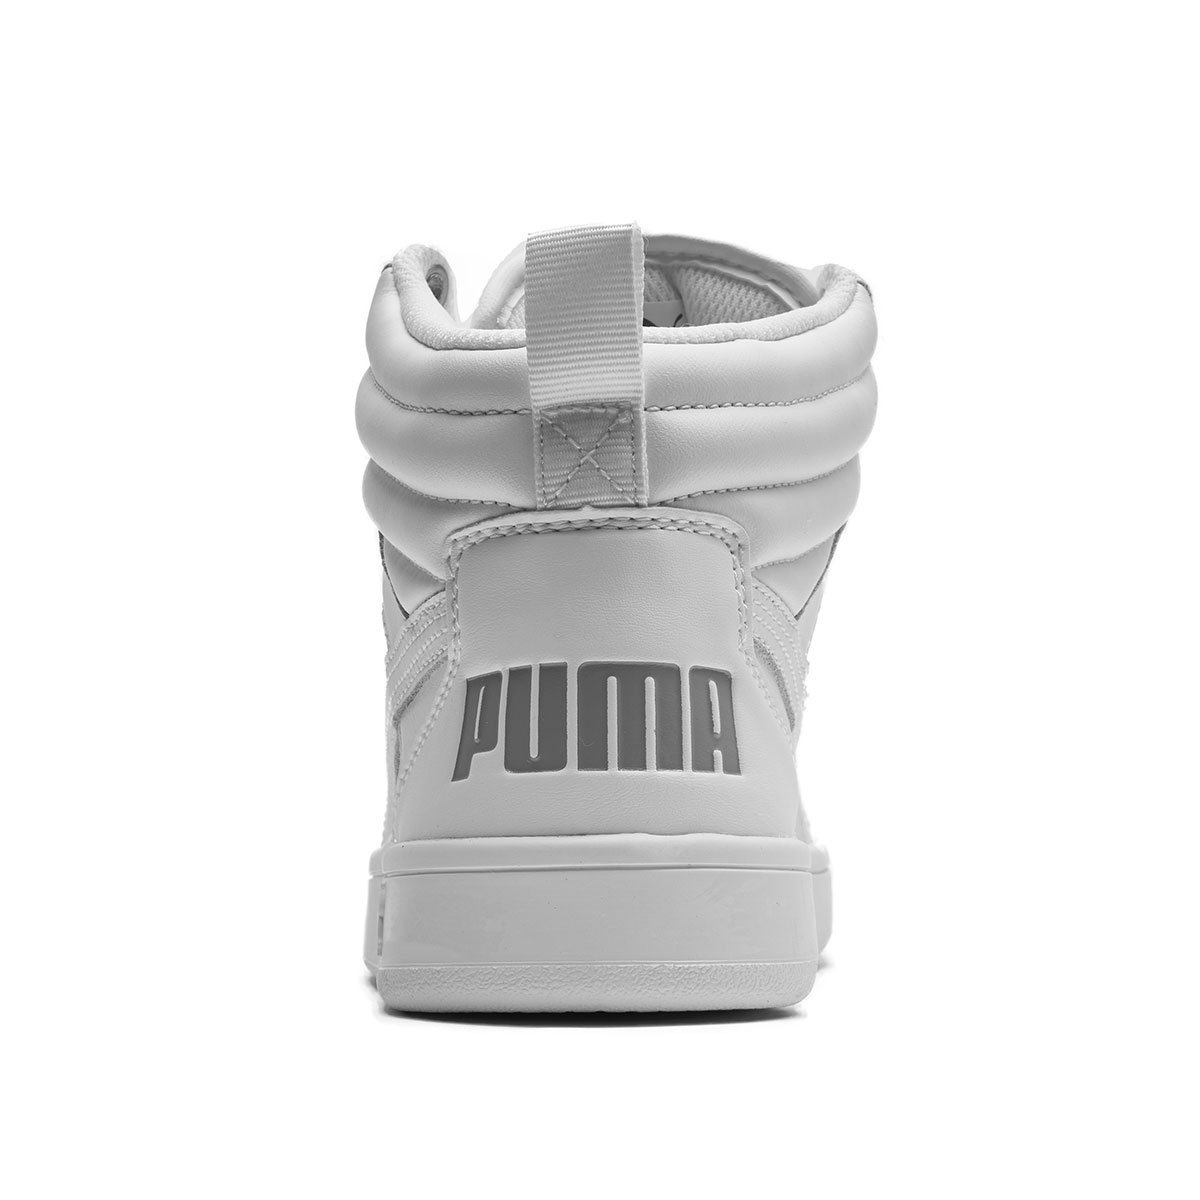 Puma Rebound Street v2 Leather  363913-02